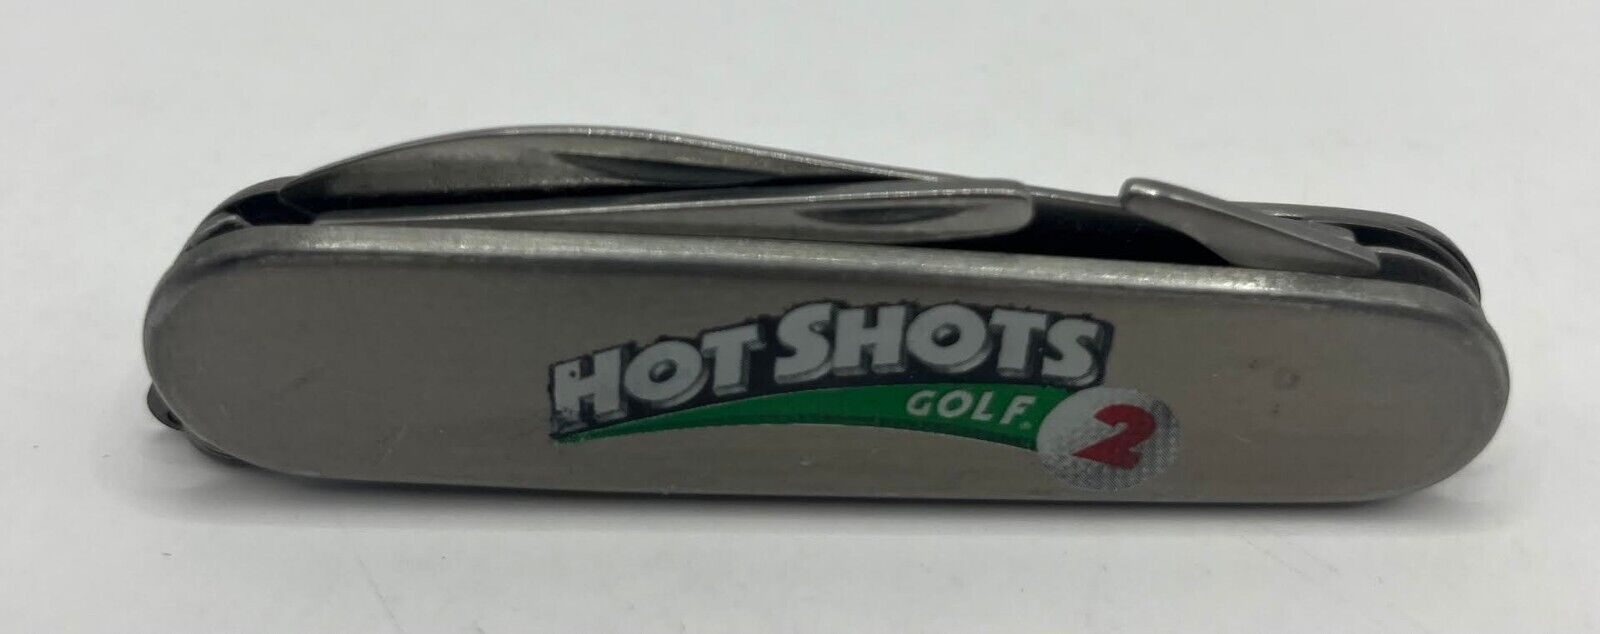 Hot Shots Golf 2 Pocket Knife Ultra Rare Promo 2000 Video Game Collectible